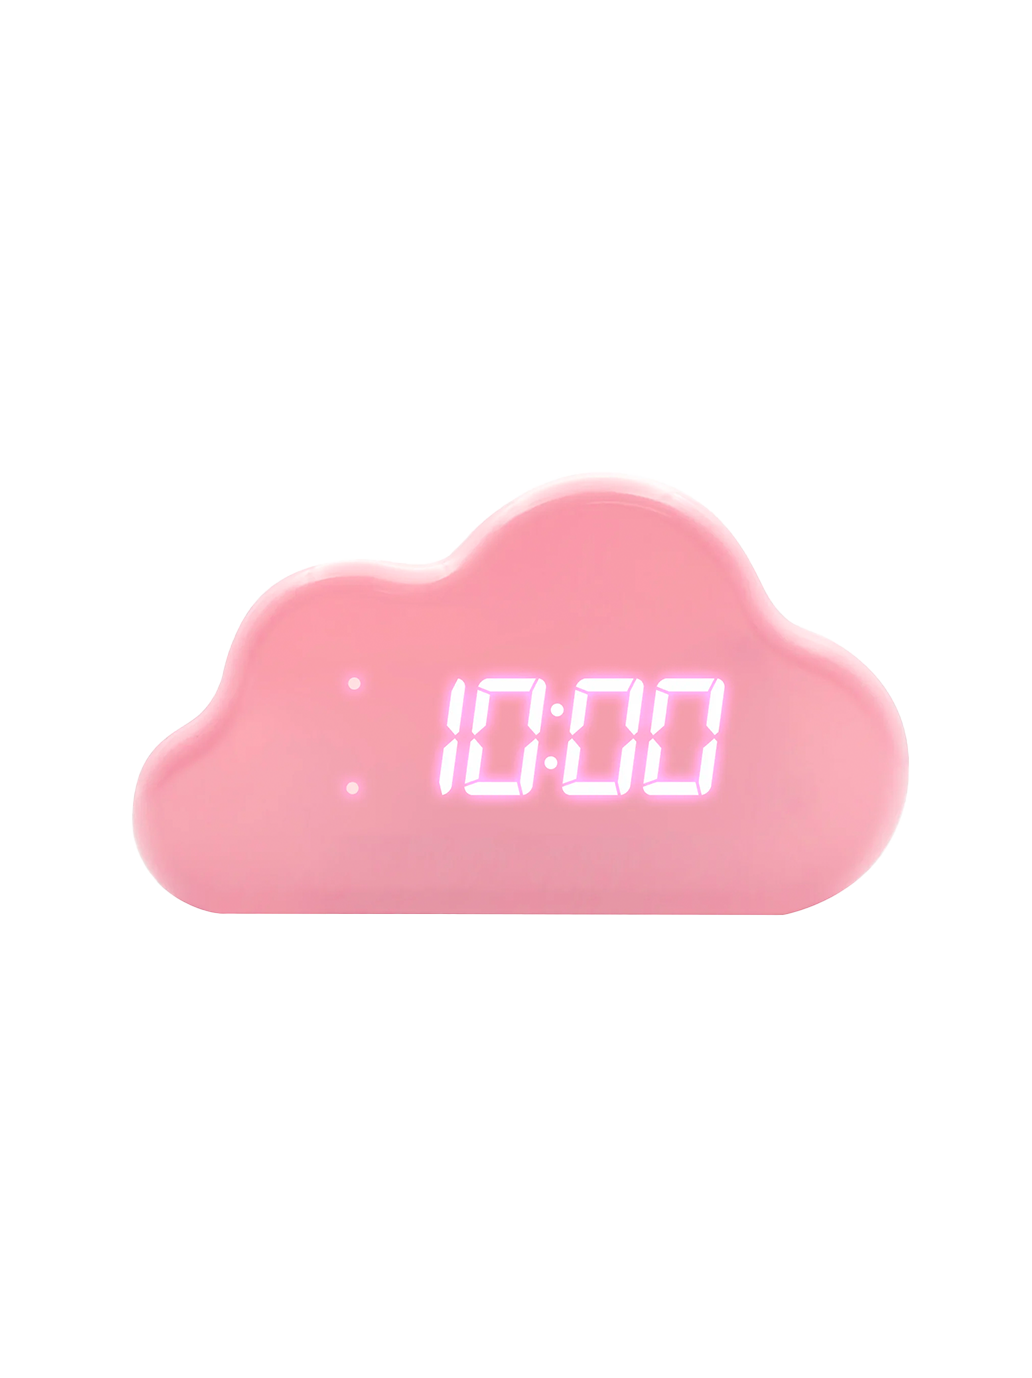 Digital cloud alarm clock